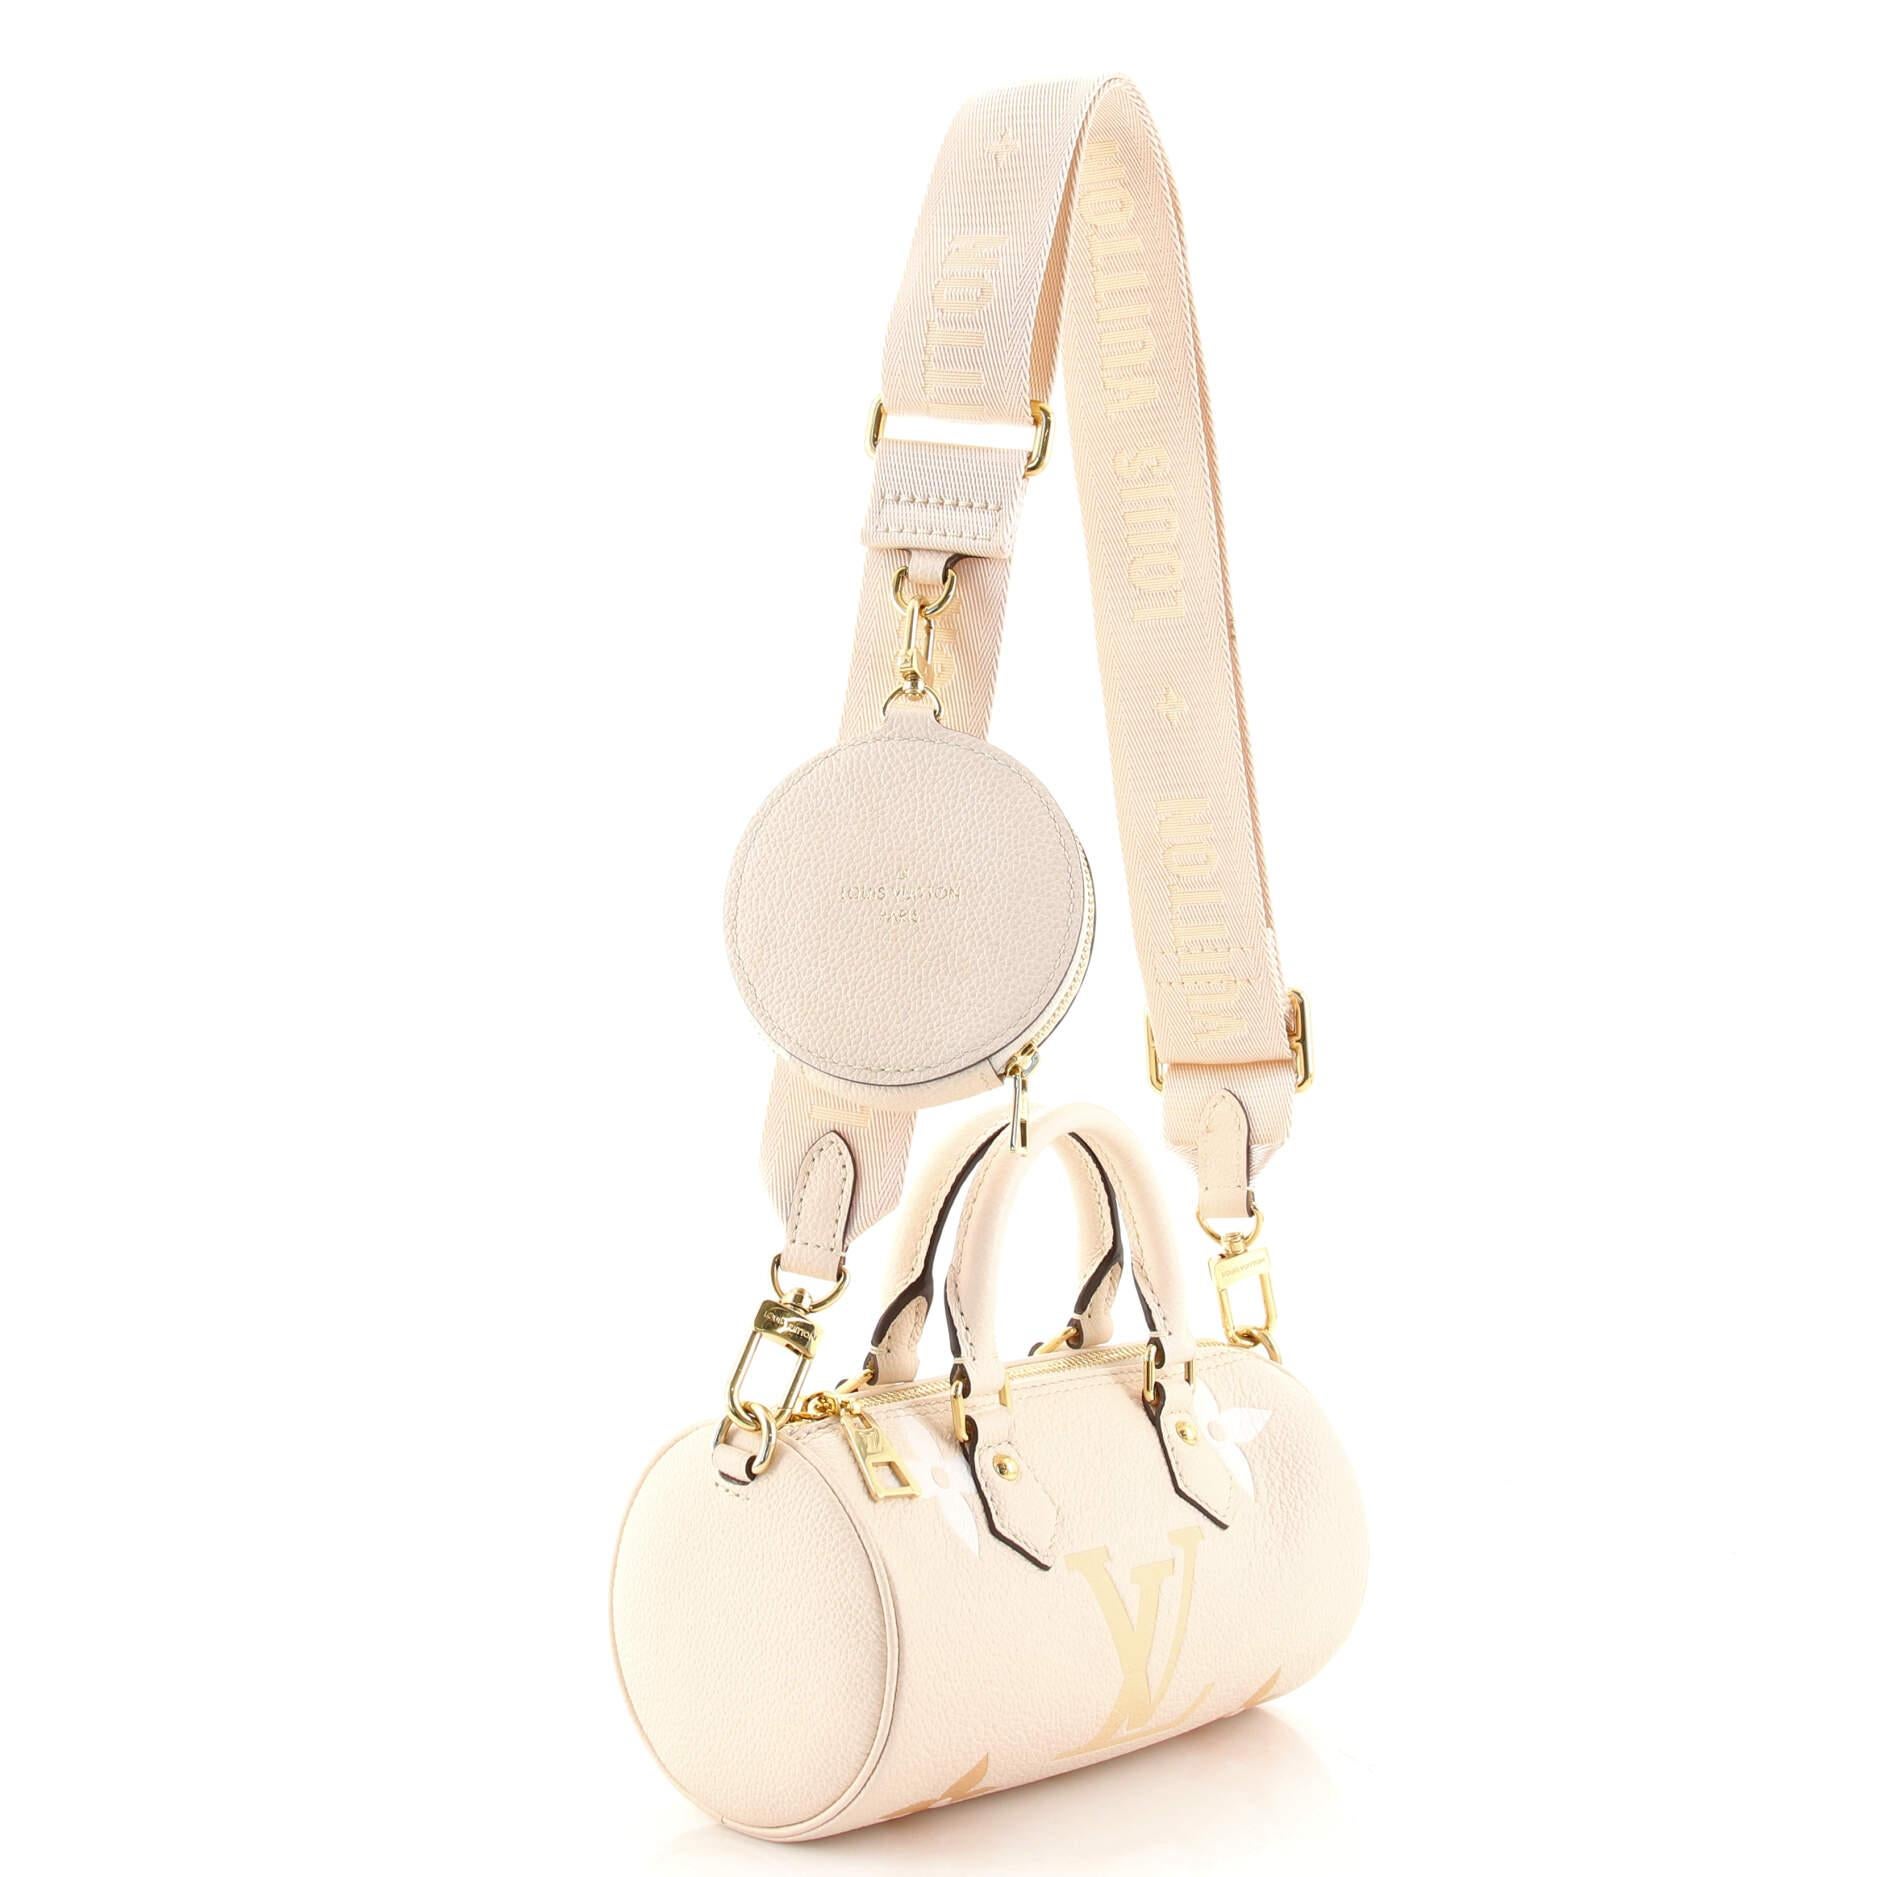 Louis Vuitton Empreinte BB Mini White Bag M59827